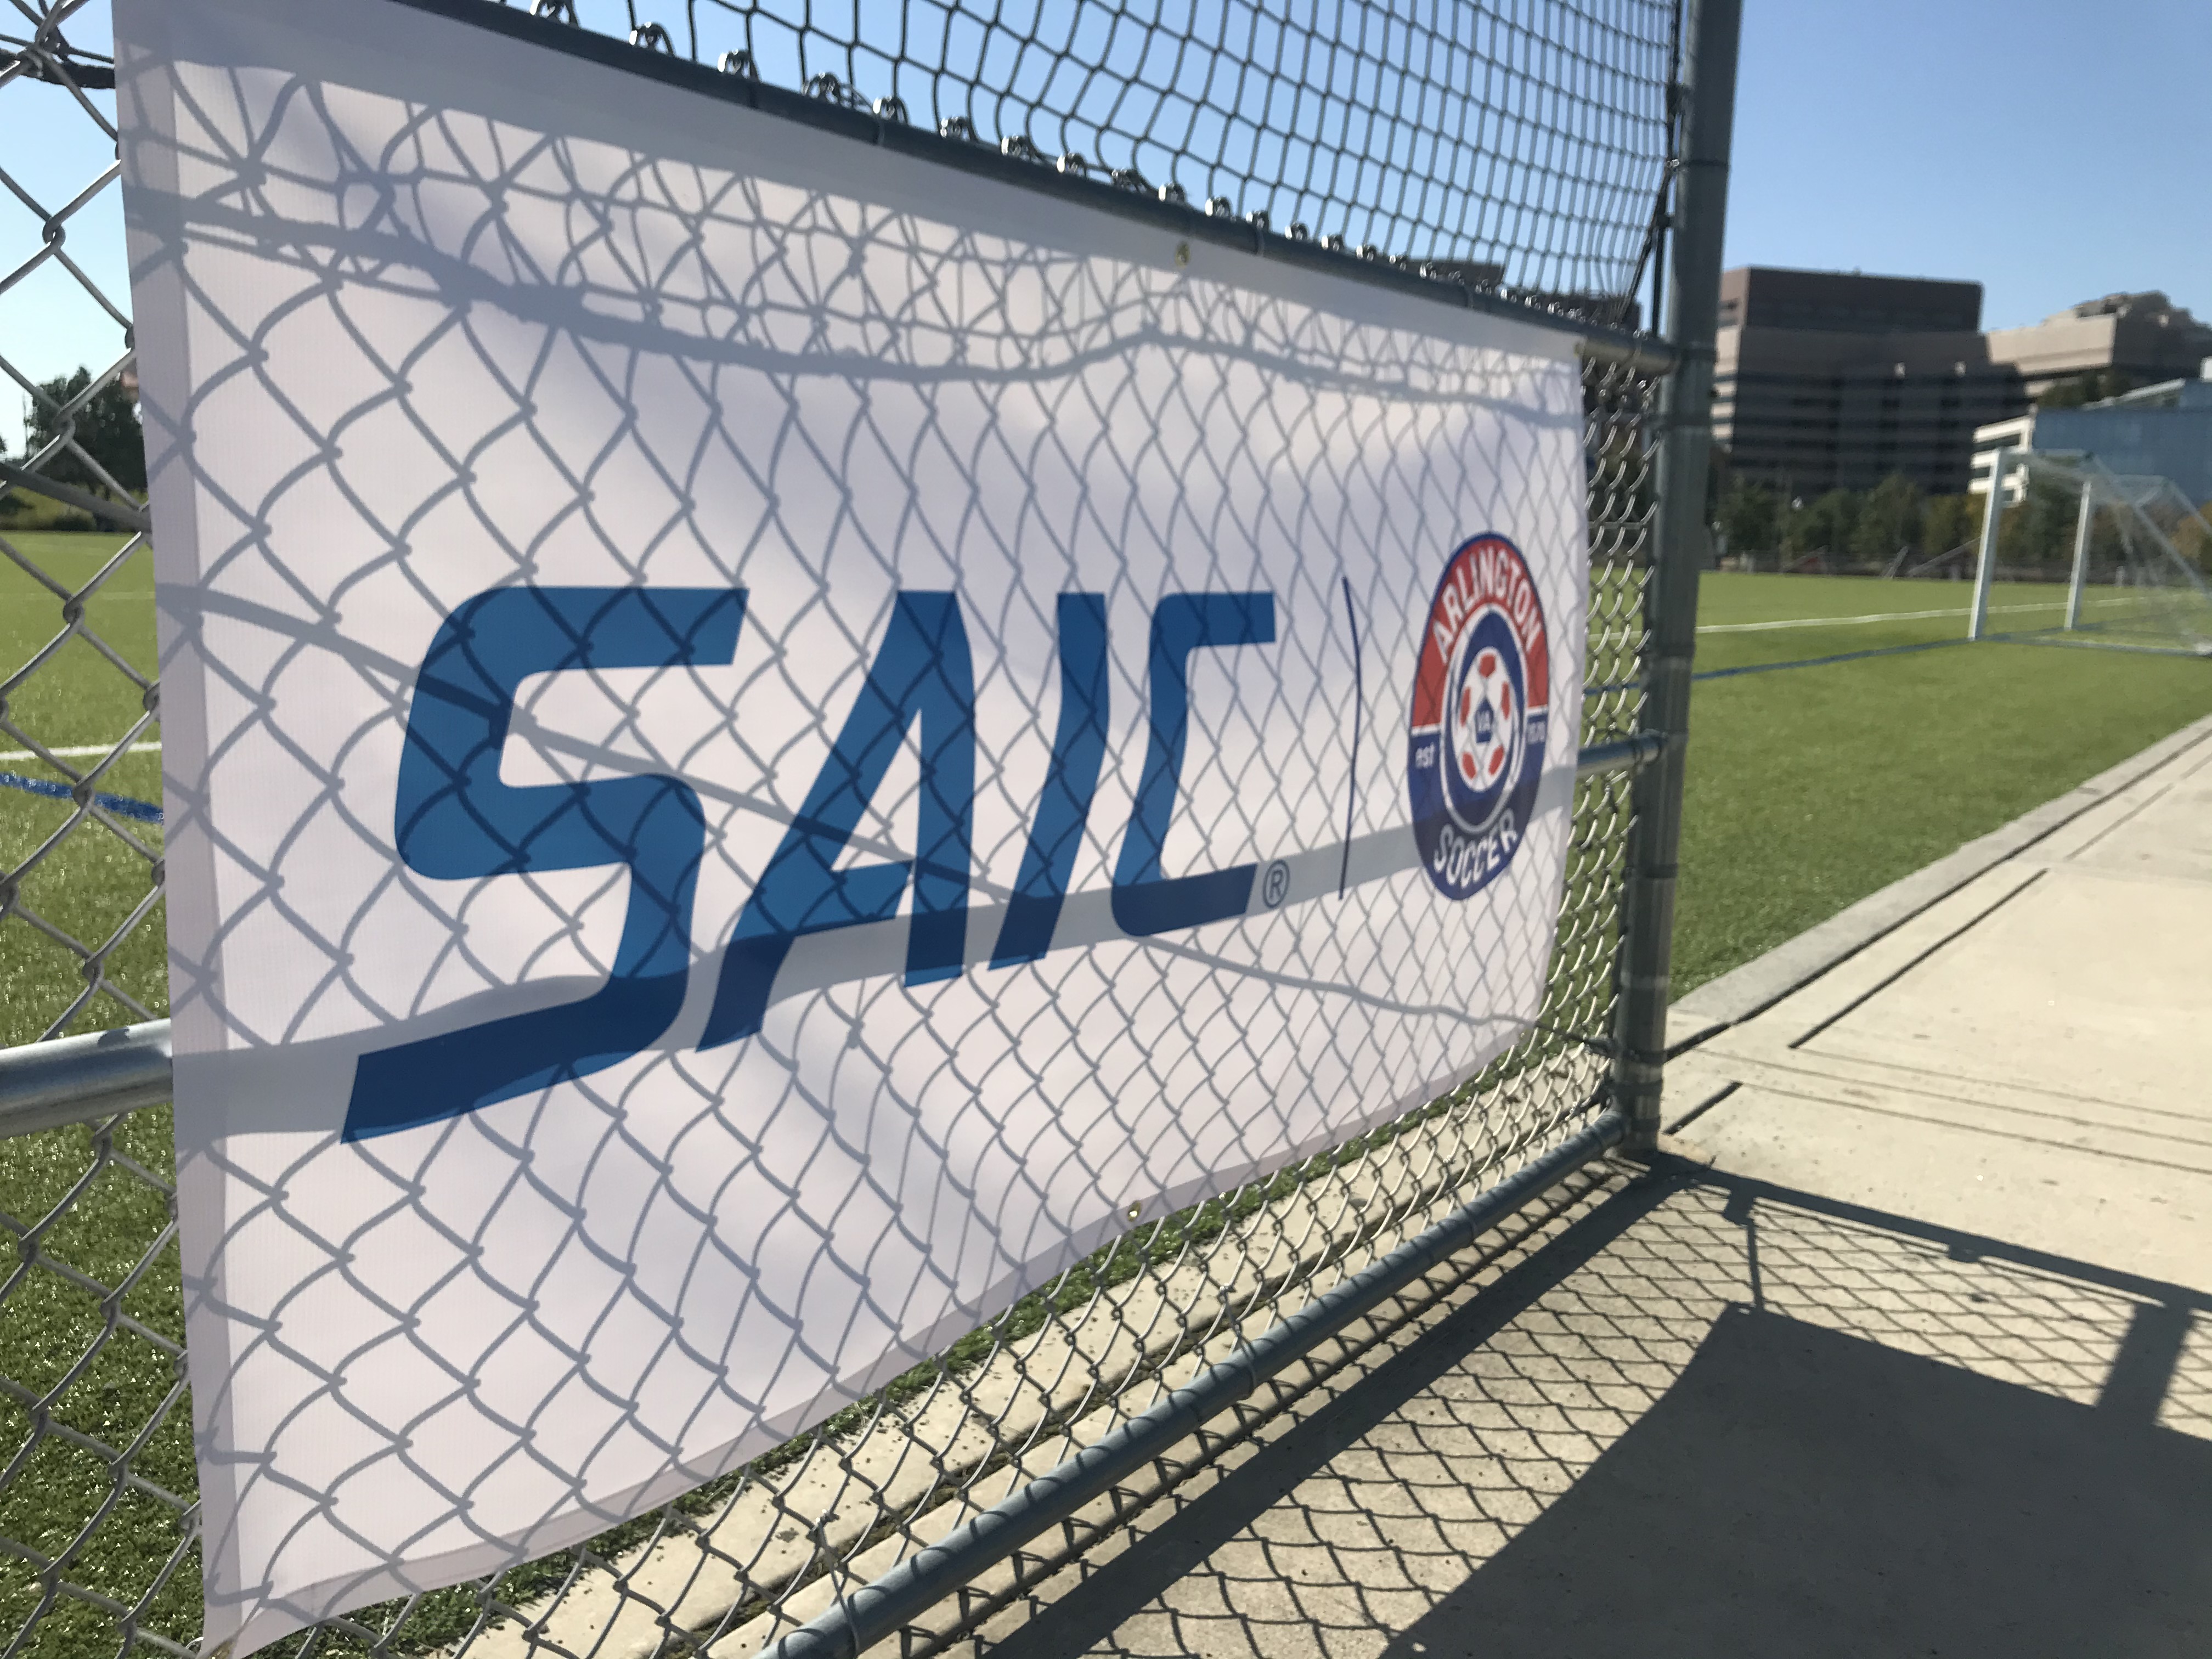 SAIC Supports Arlington Soccer